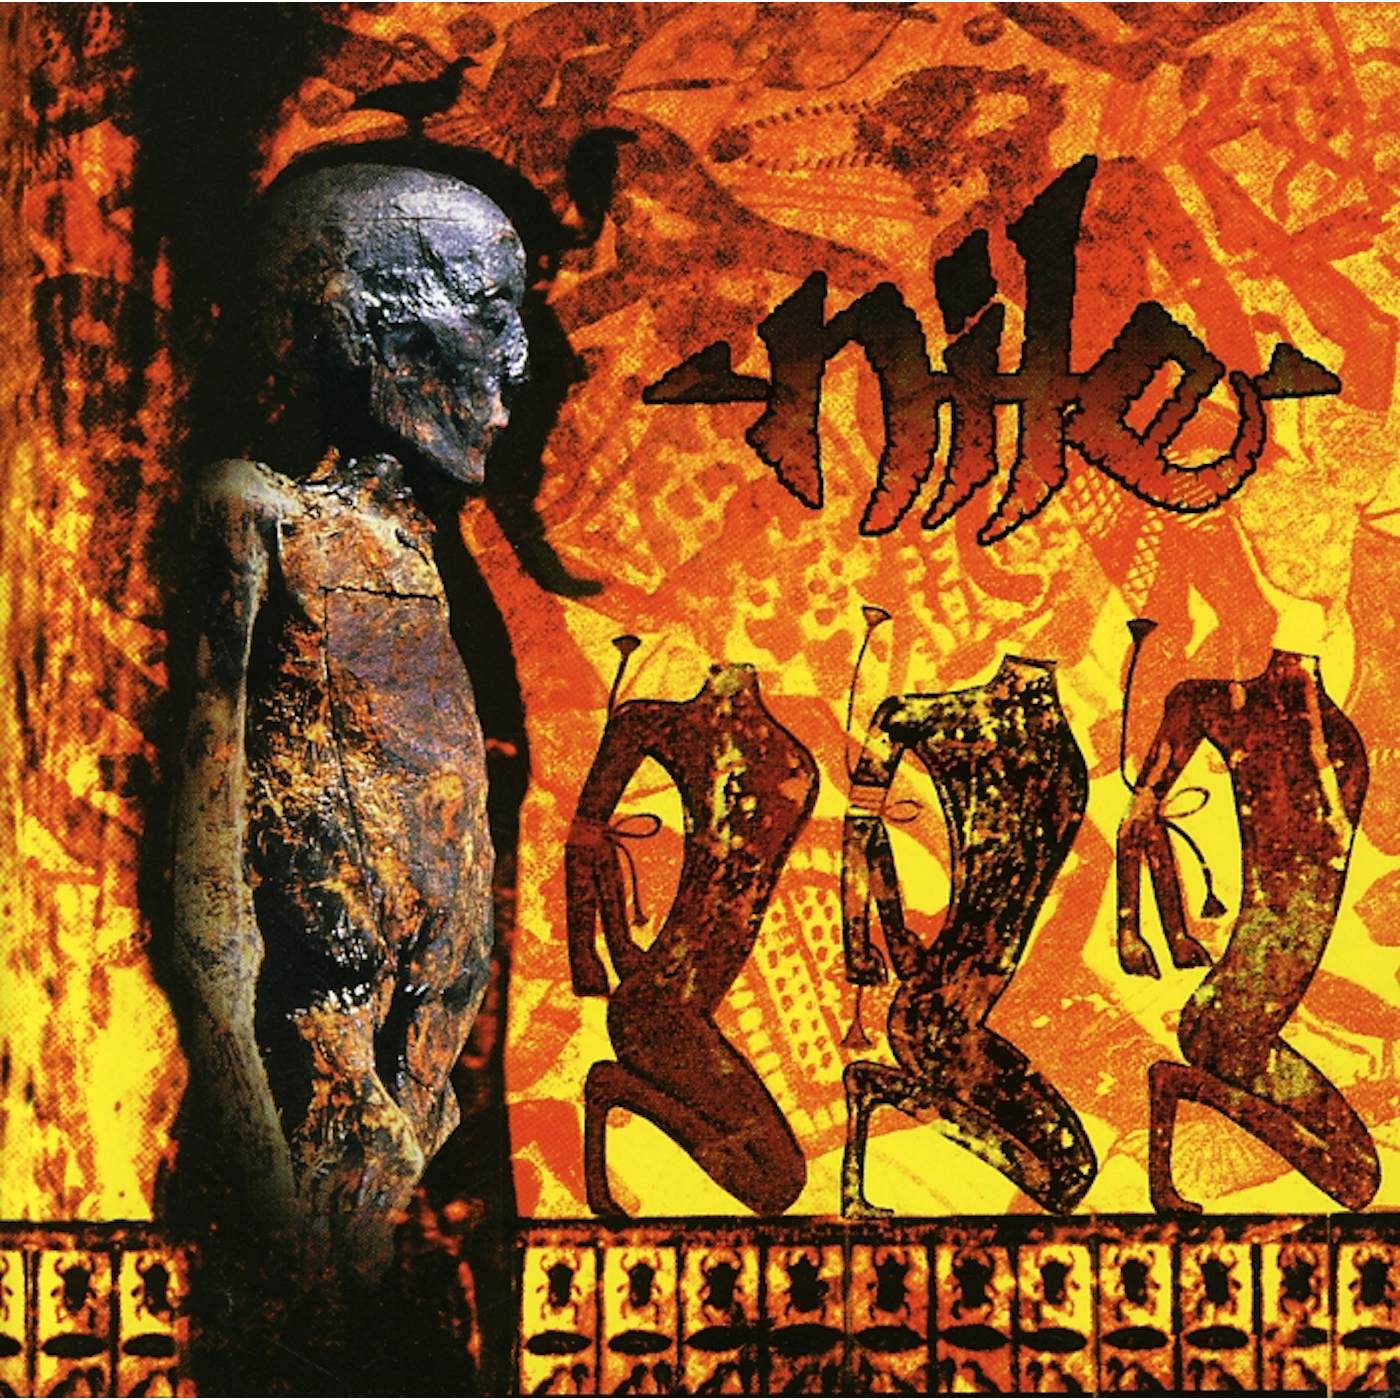 Nile AMONGST THE CATACOMBS OF NEPHREN-KA CD